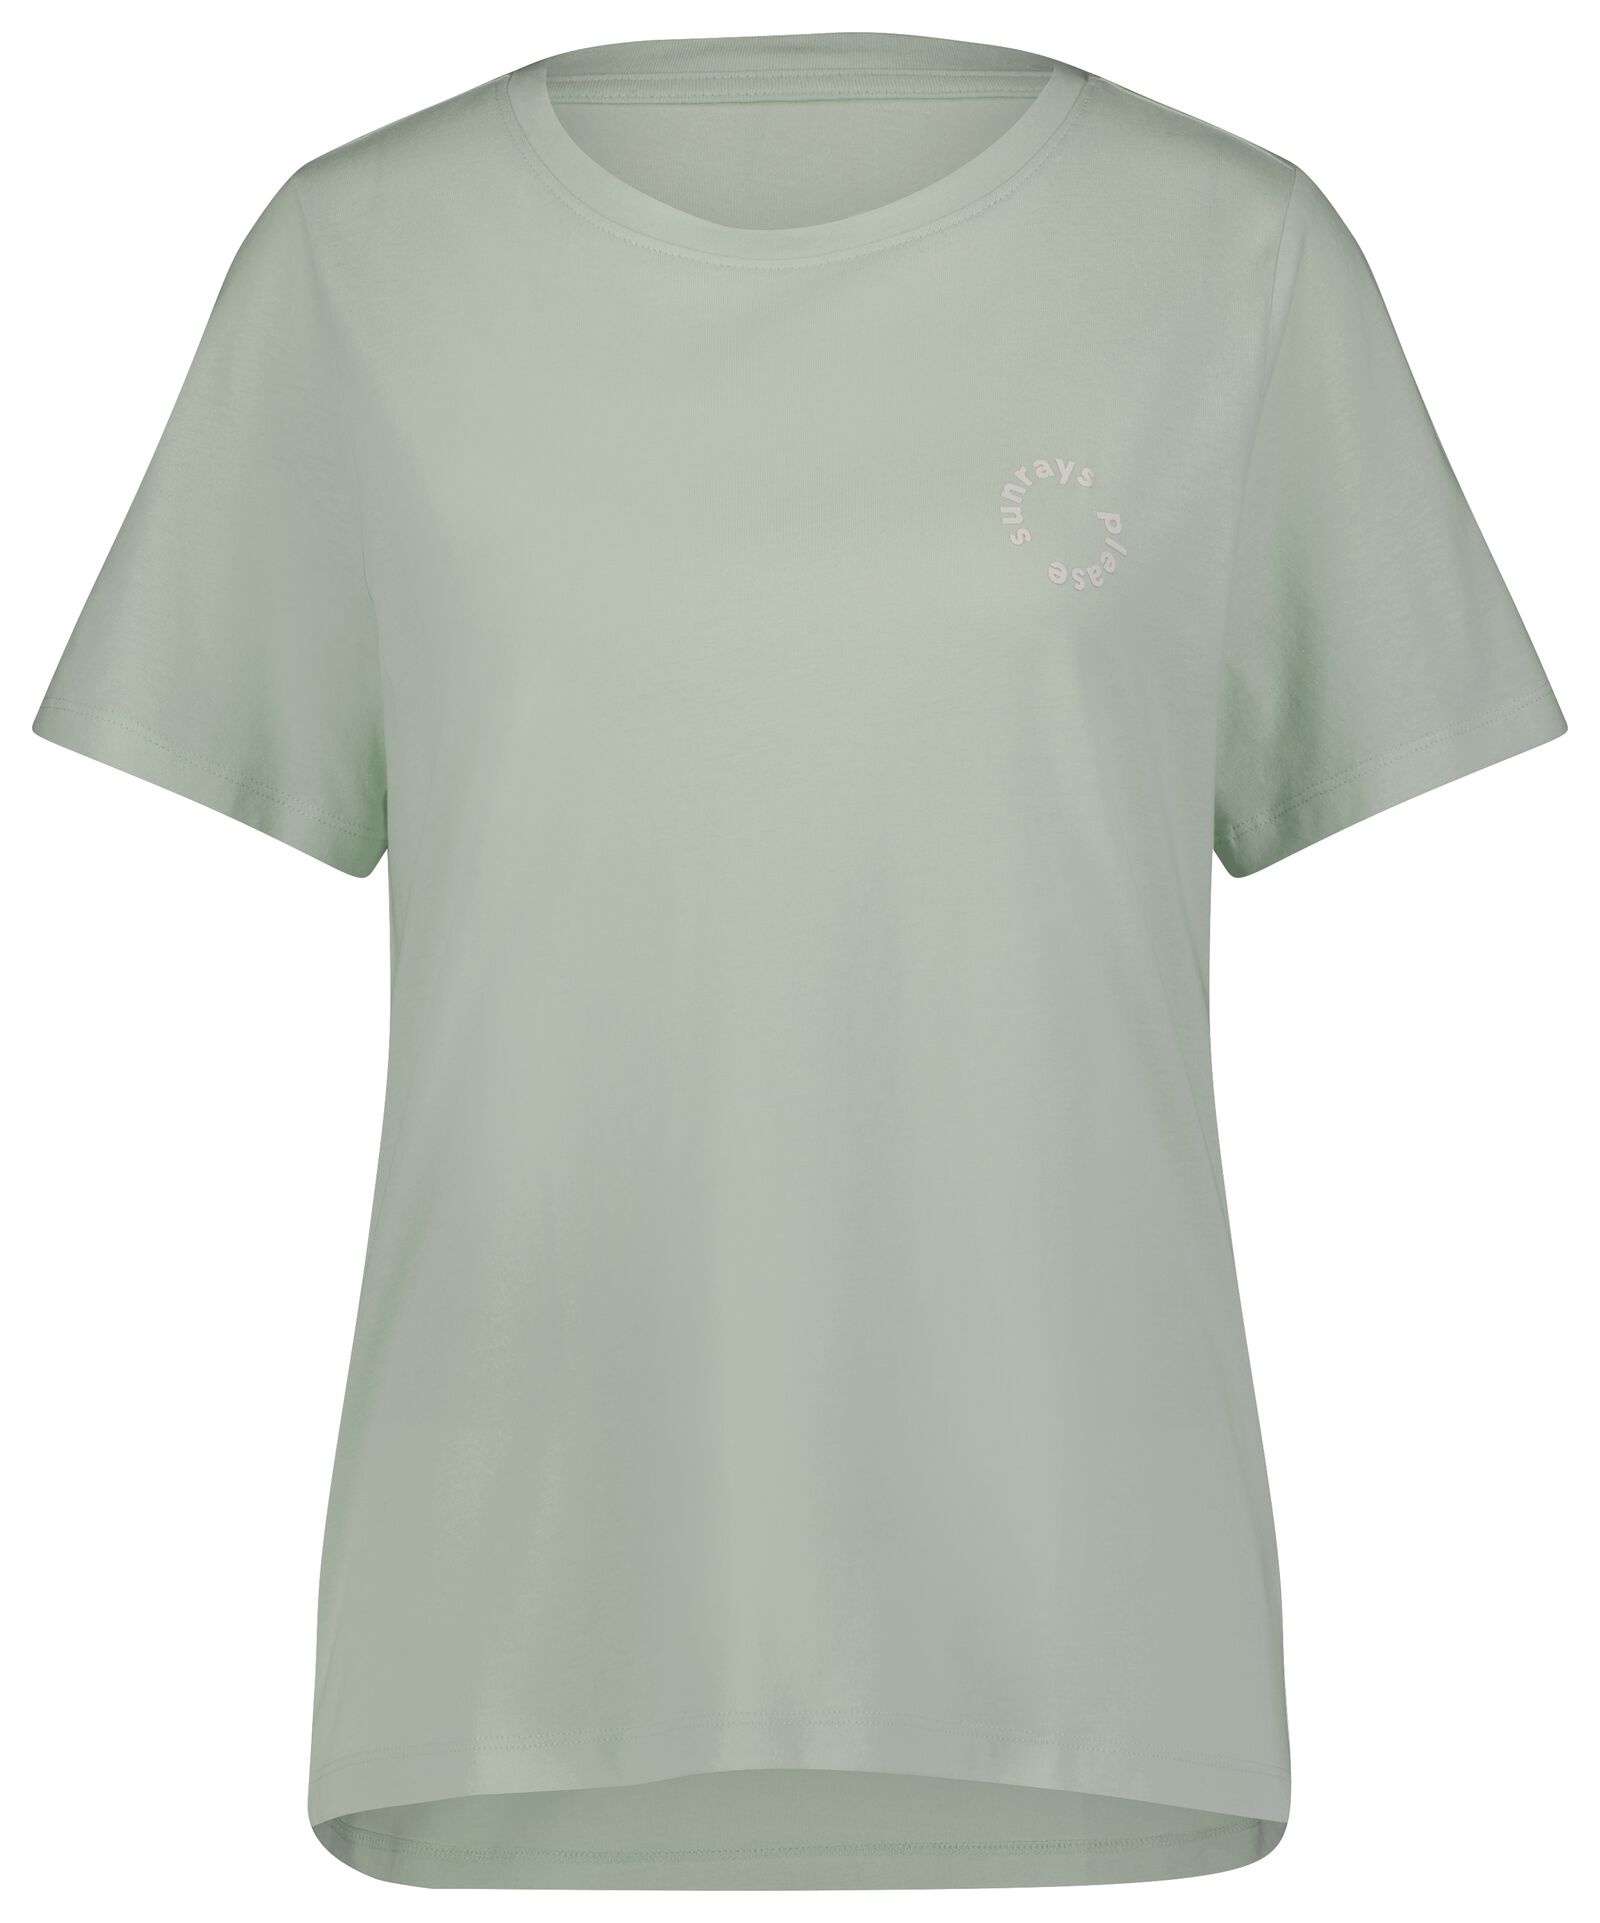 Damen-T-Shirt Alara, Sunrays hellgrün M - 36235447 - HEMA